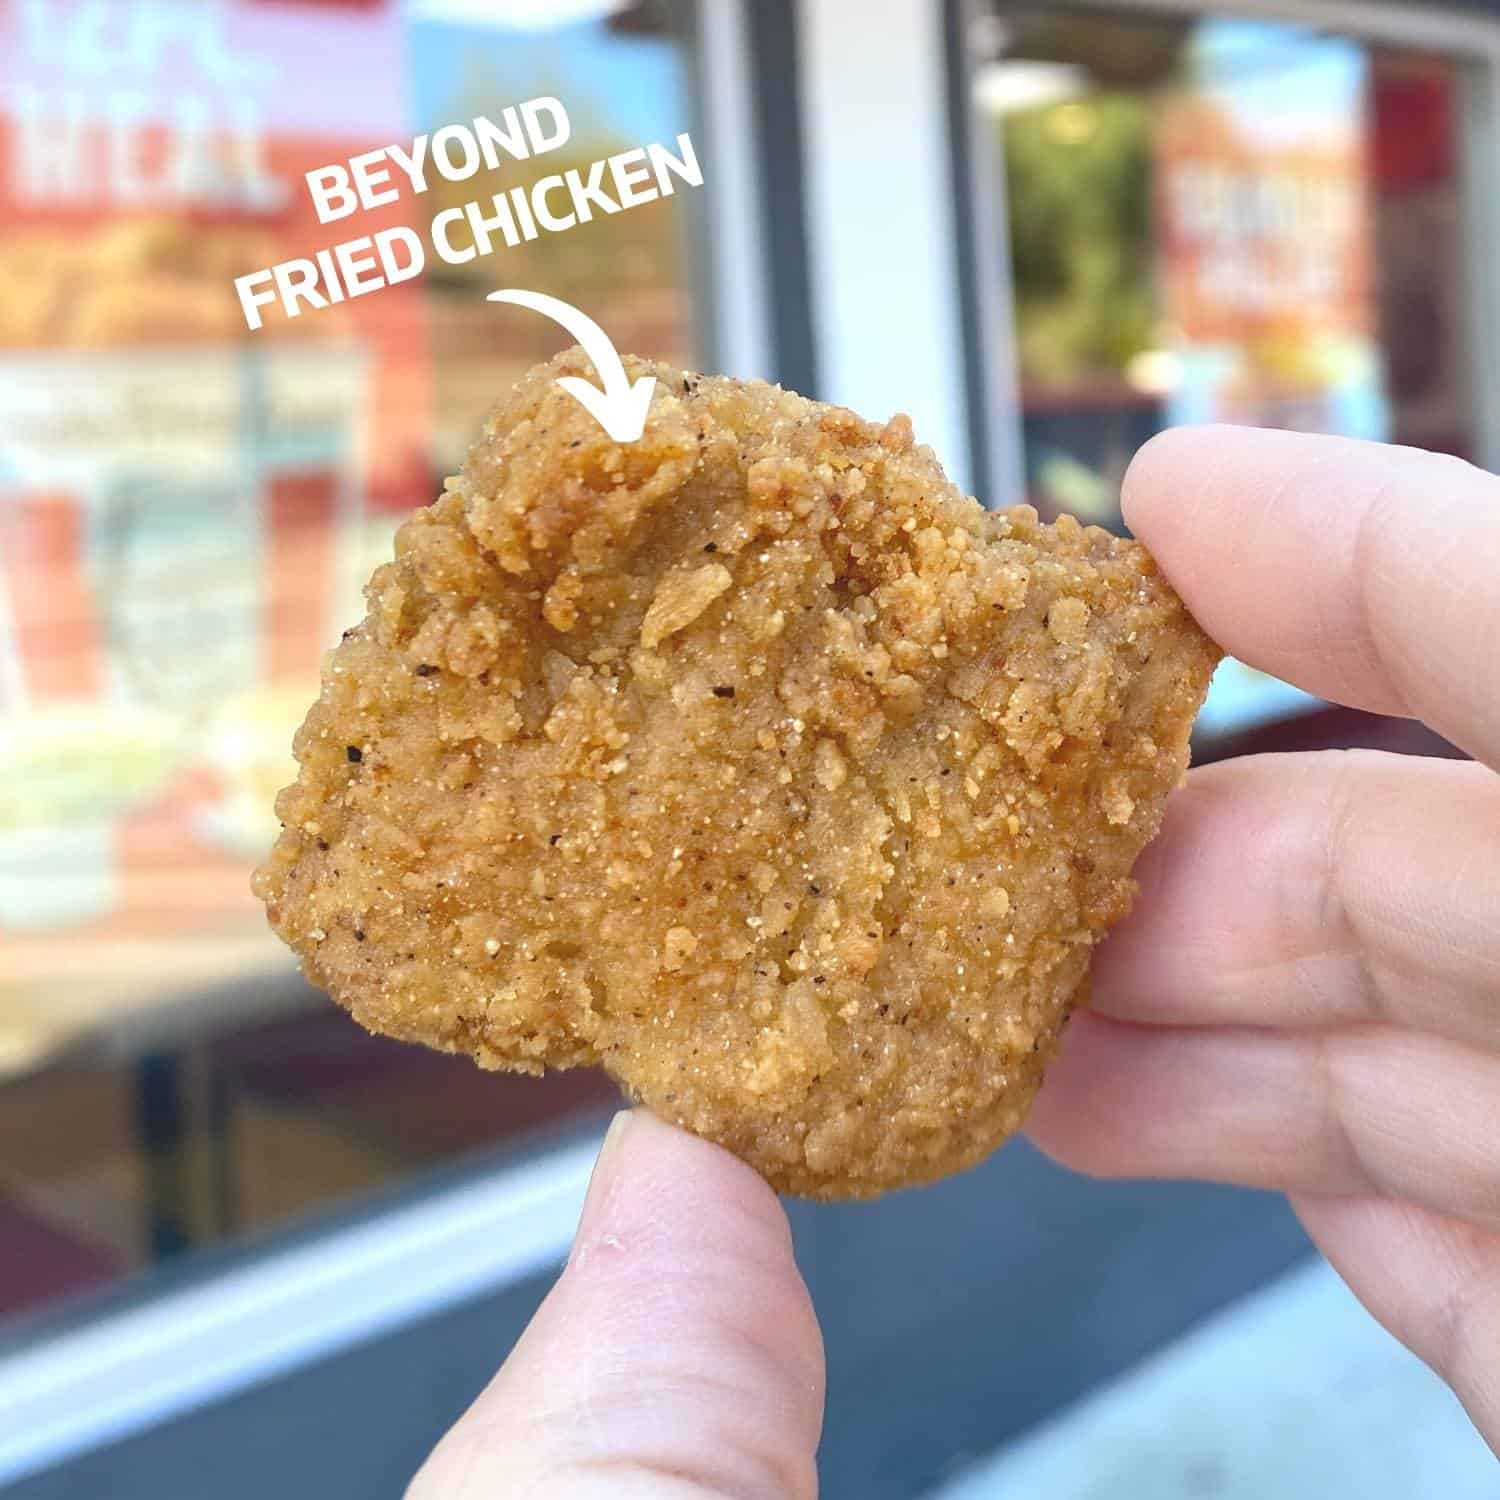 Beyond Fried Chicken vegan kfc nugget up close photo